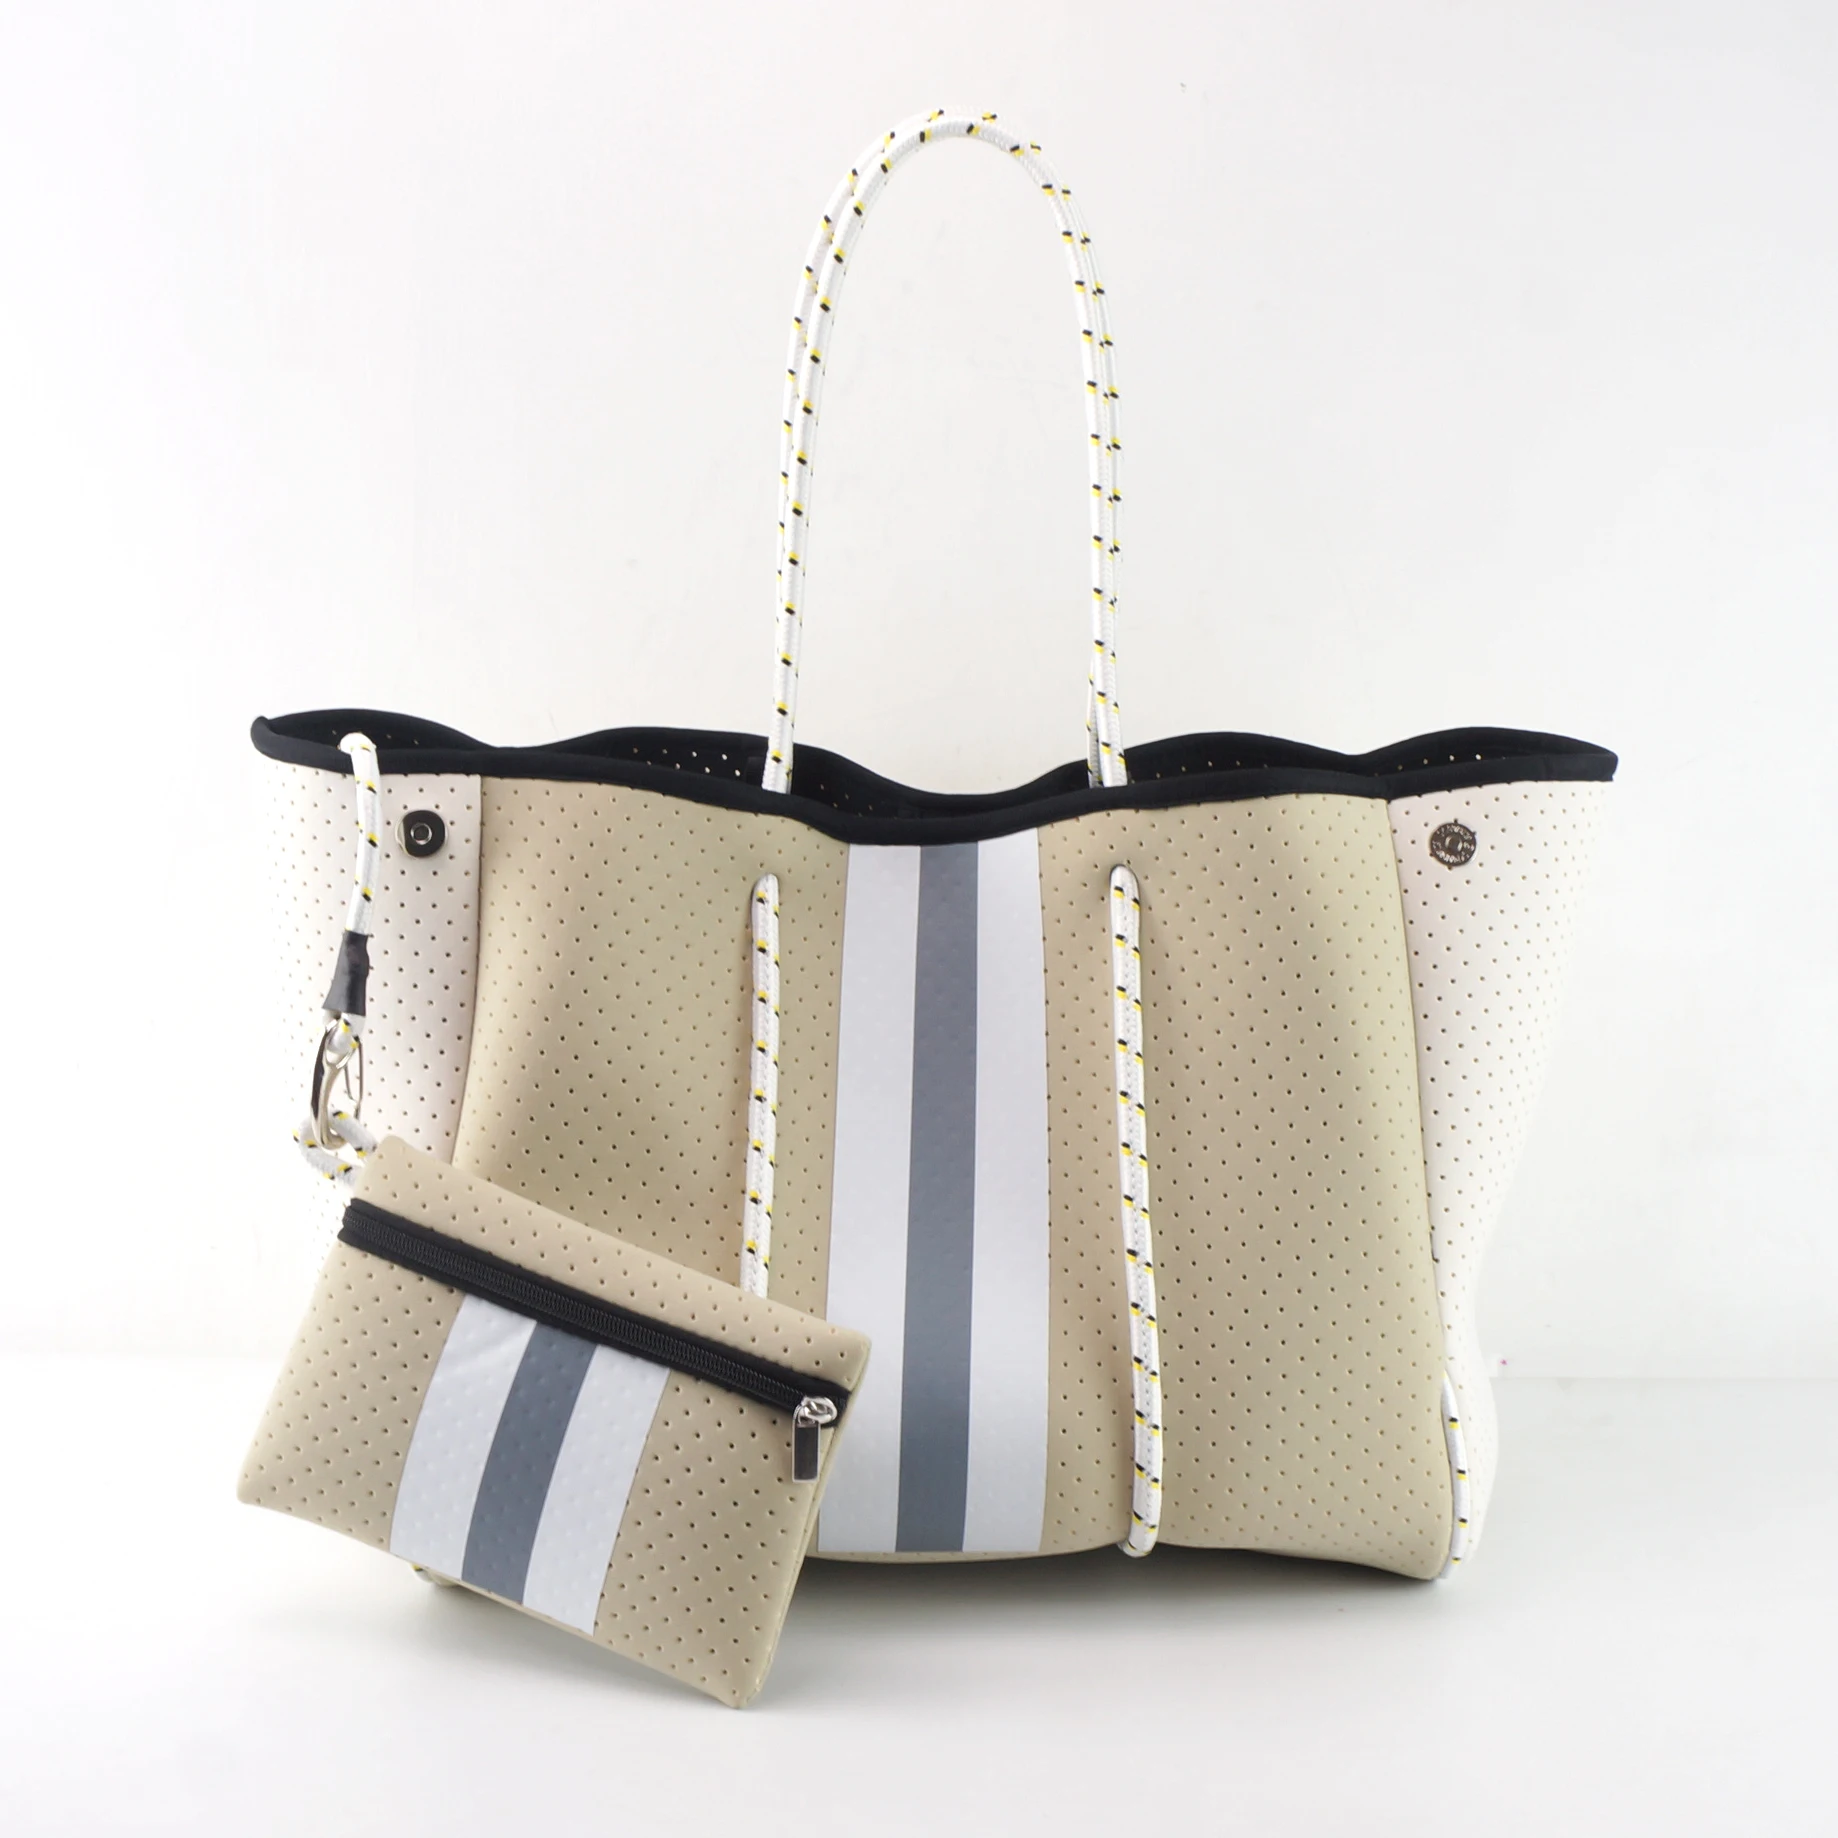 

2021 Fashion bag perforated neoprene beach handbag metallic neoprene tote bag hand bag for women, Accept customizable